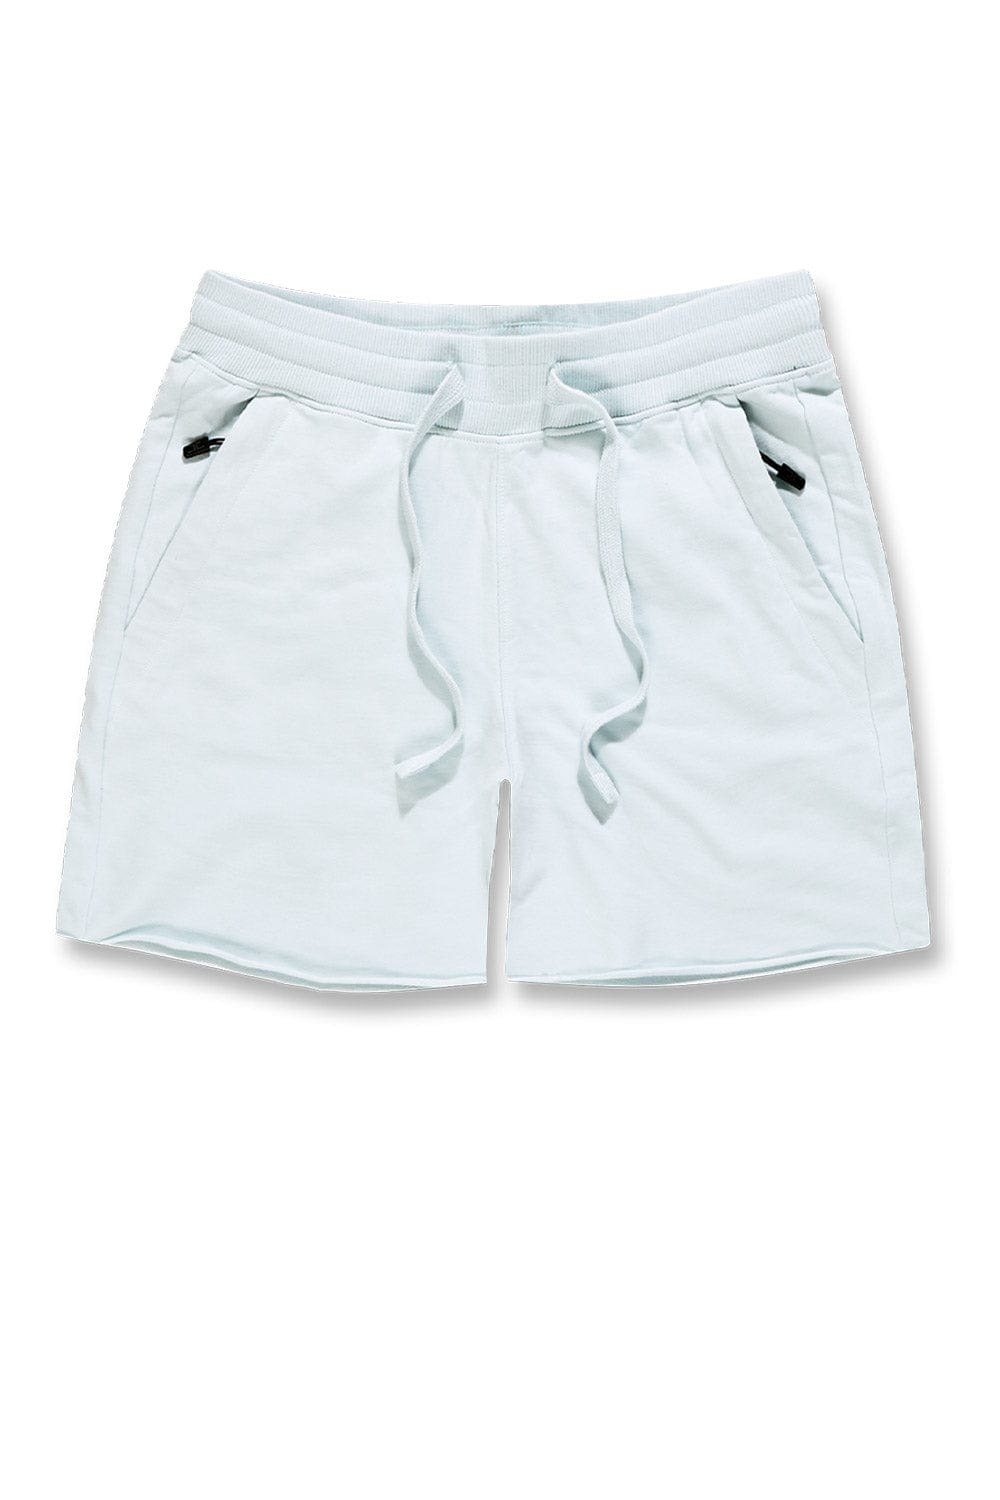 Jordan Craig Athletic - Summer Breeze Knit Shorts (Memorial Day Markdown) Coastal Blue / S